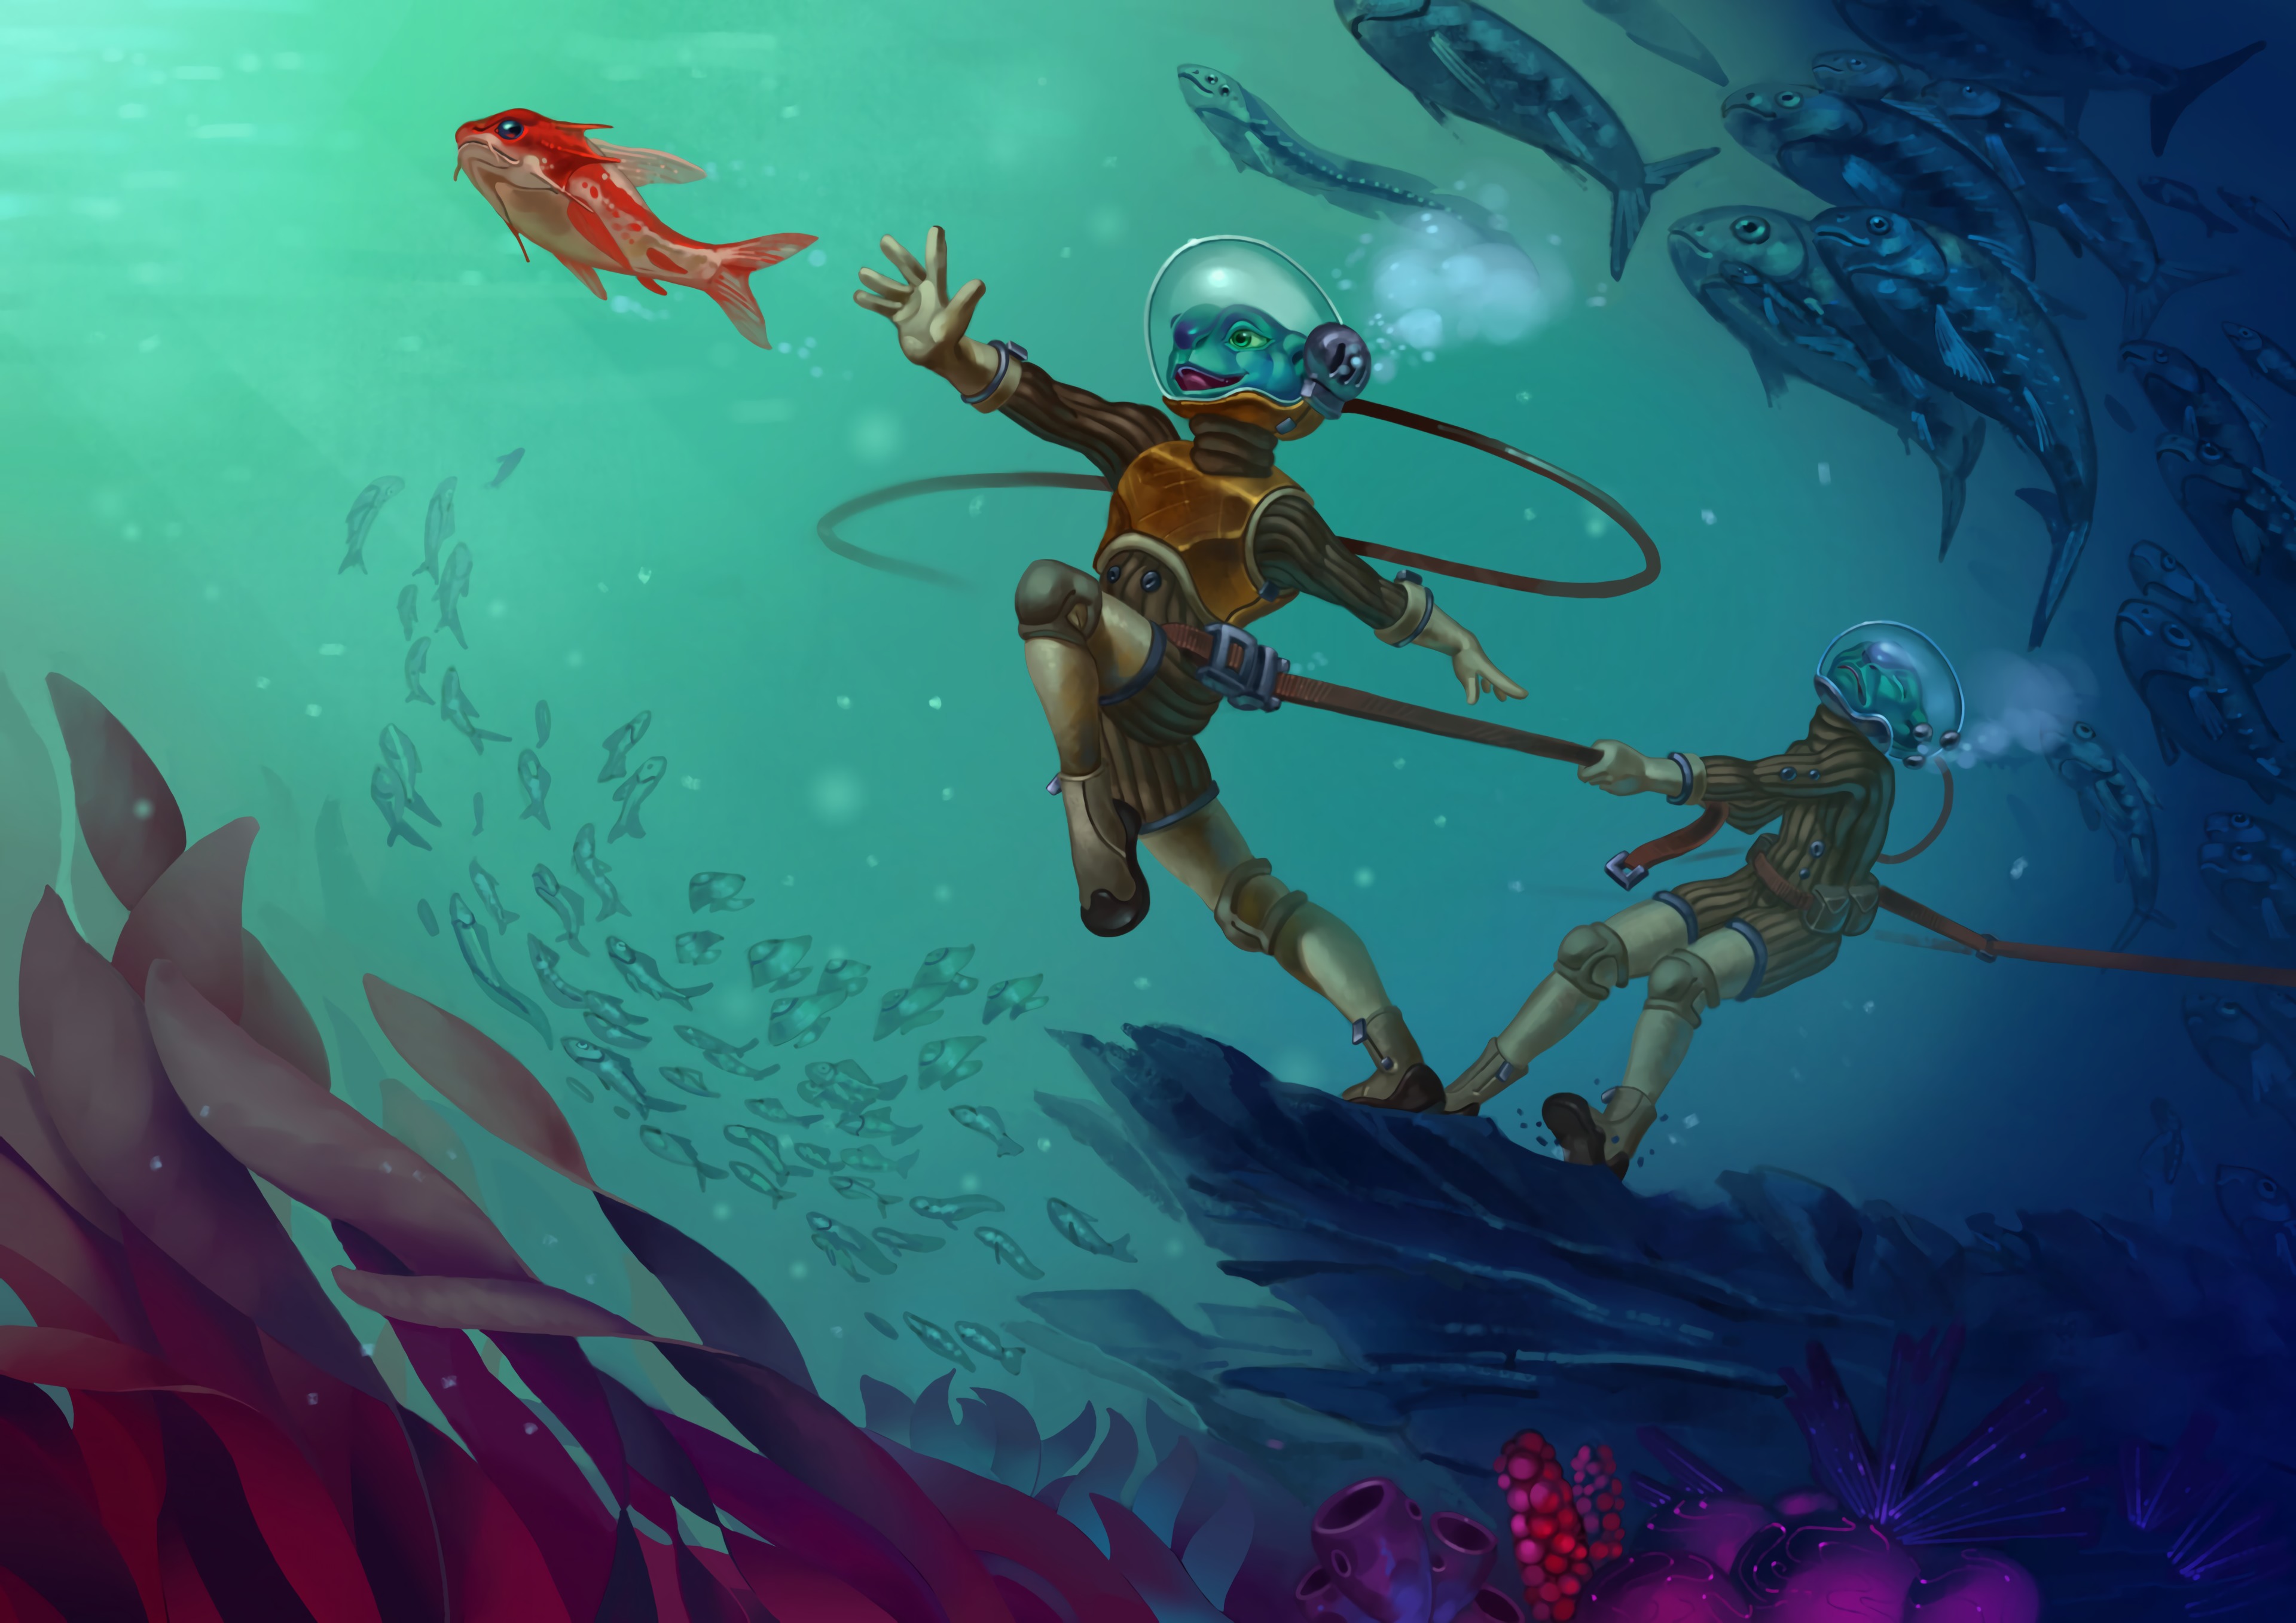 art, underwater world, being, creature, scuba, aqualung